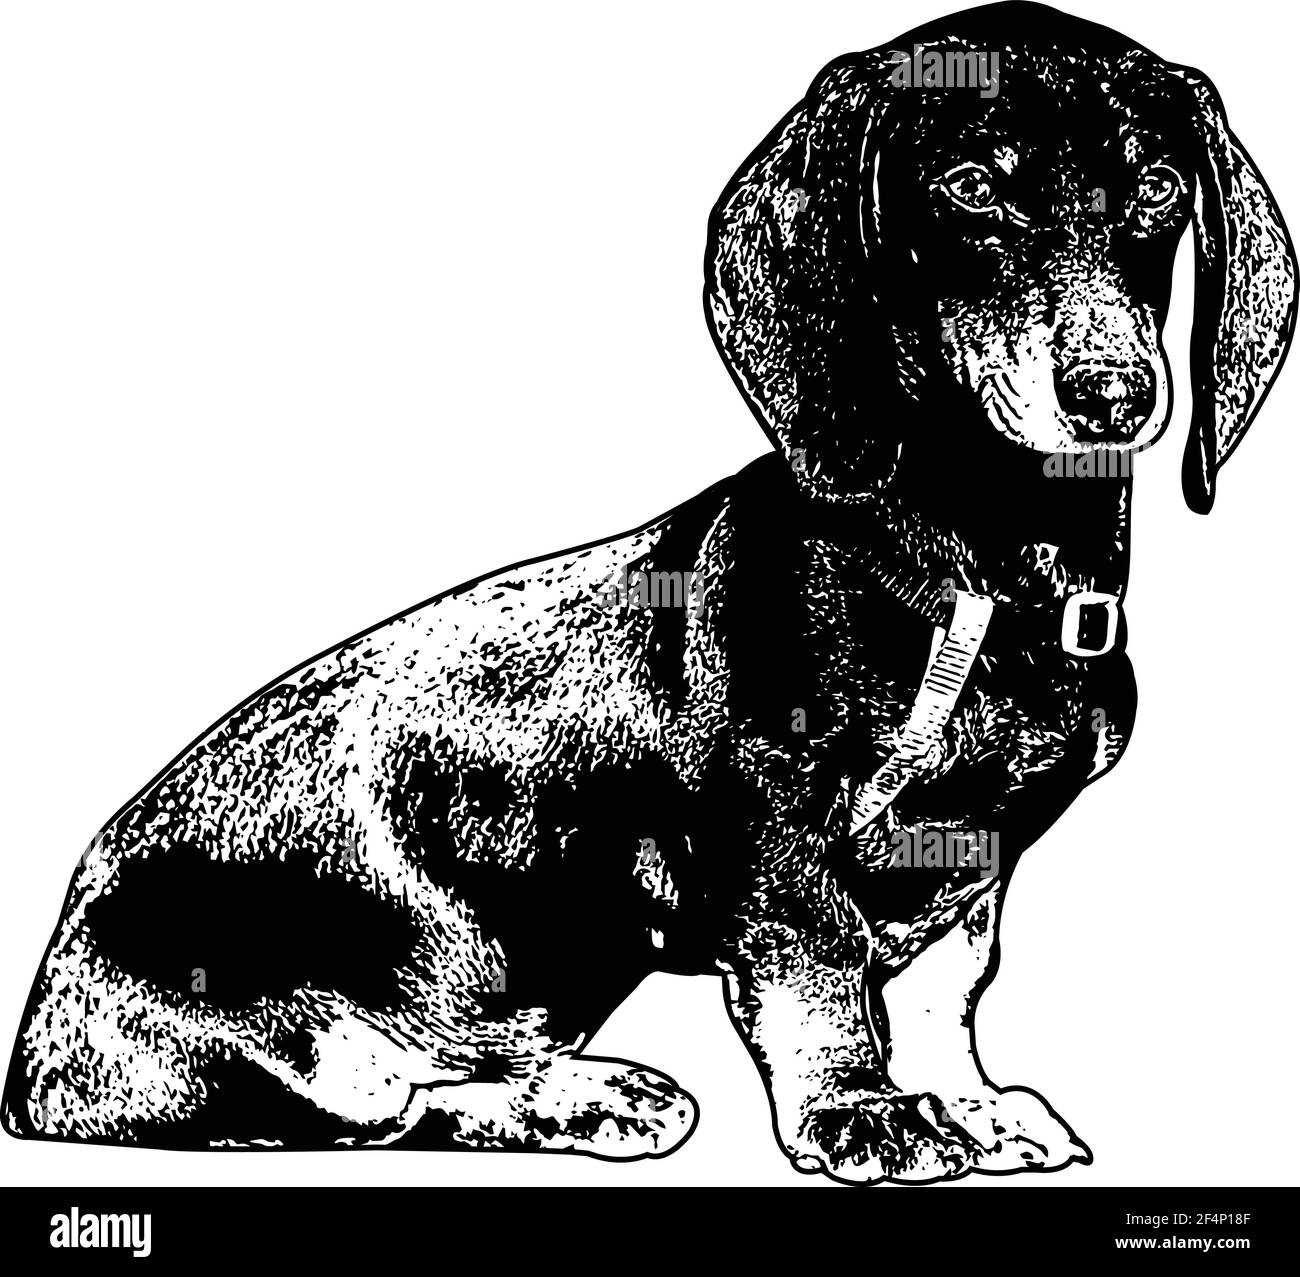 dachshund dog sketch - vector illustration Stock Vector